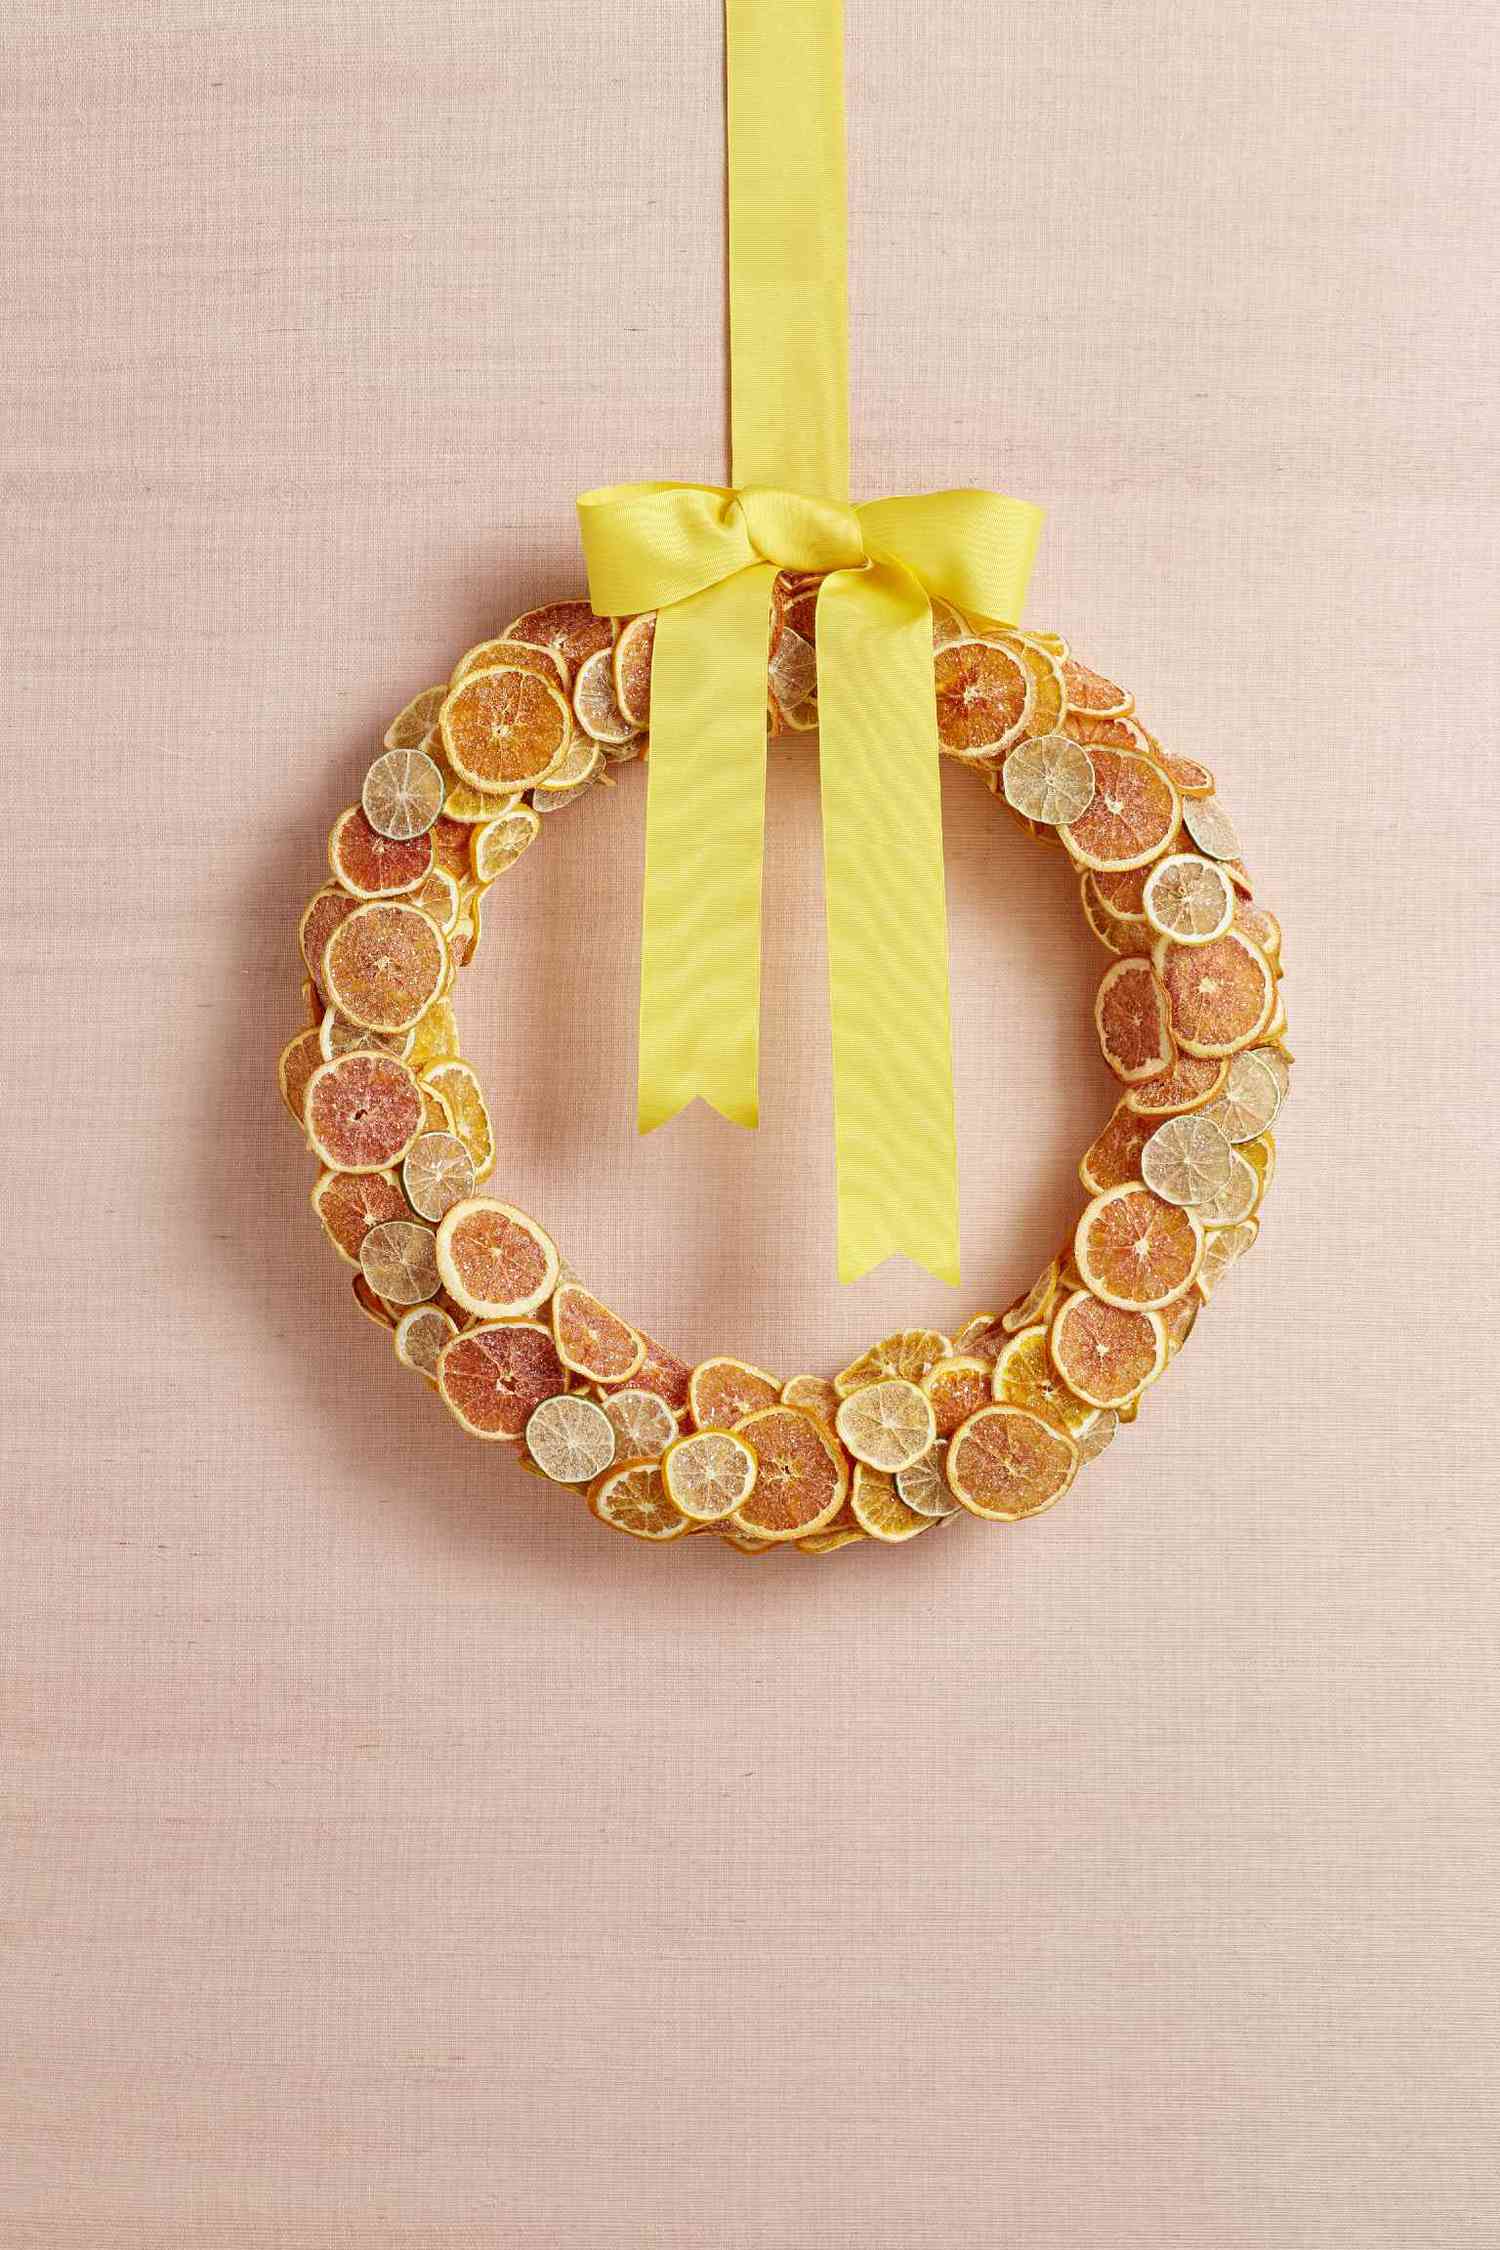 DIY dried citrus fruit wreath